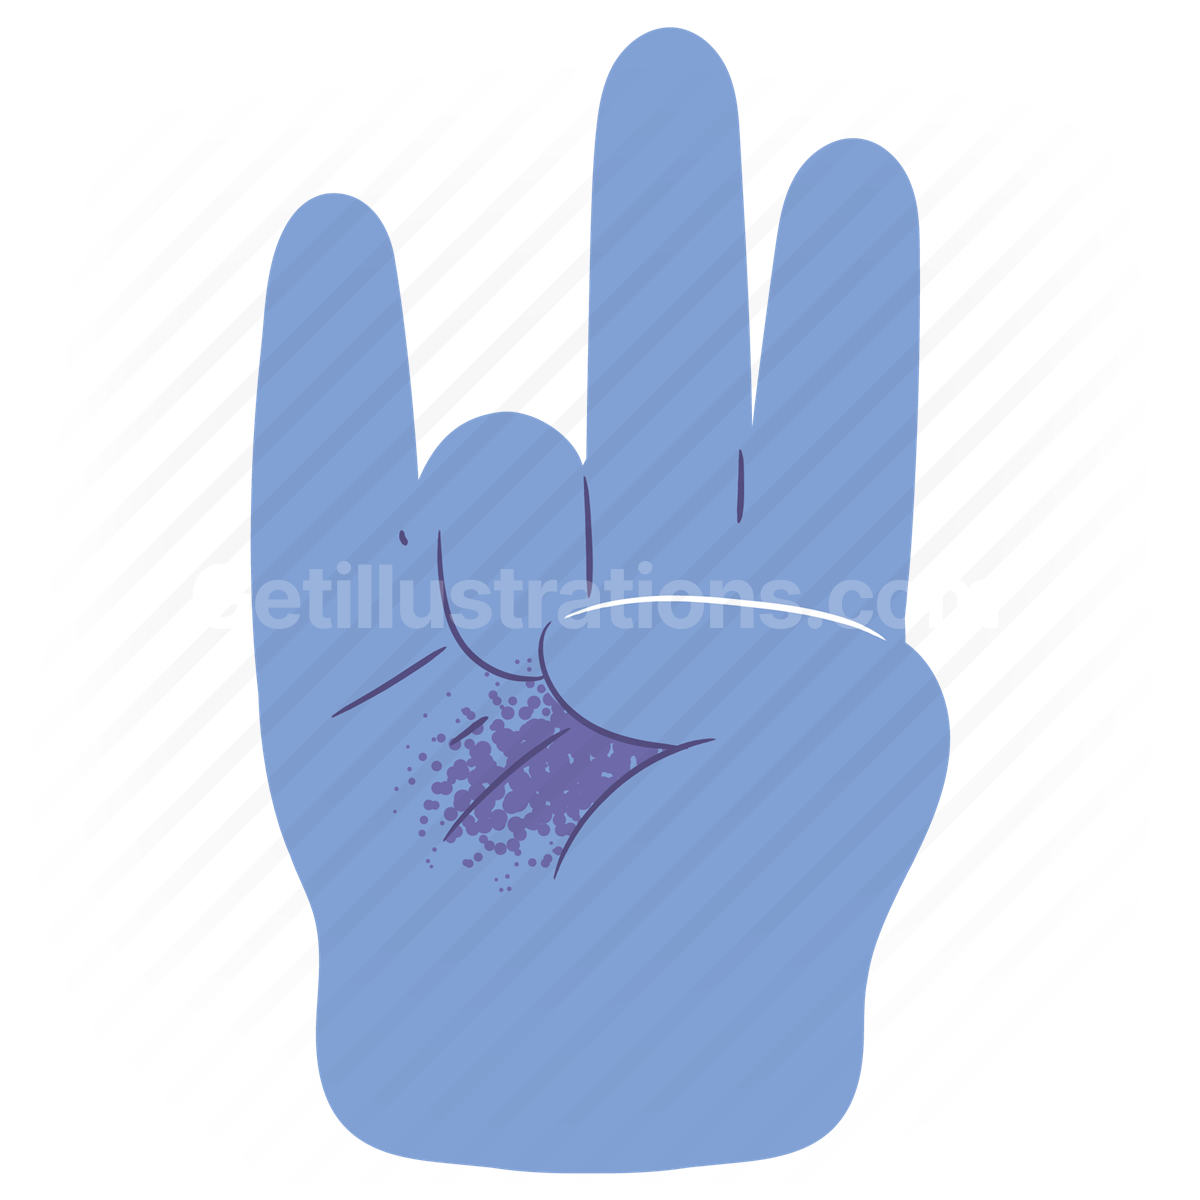 hand gesture, gesture, hand, sign, language, letters, alphabet, gesturing